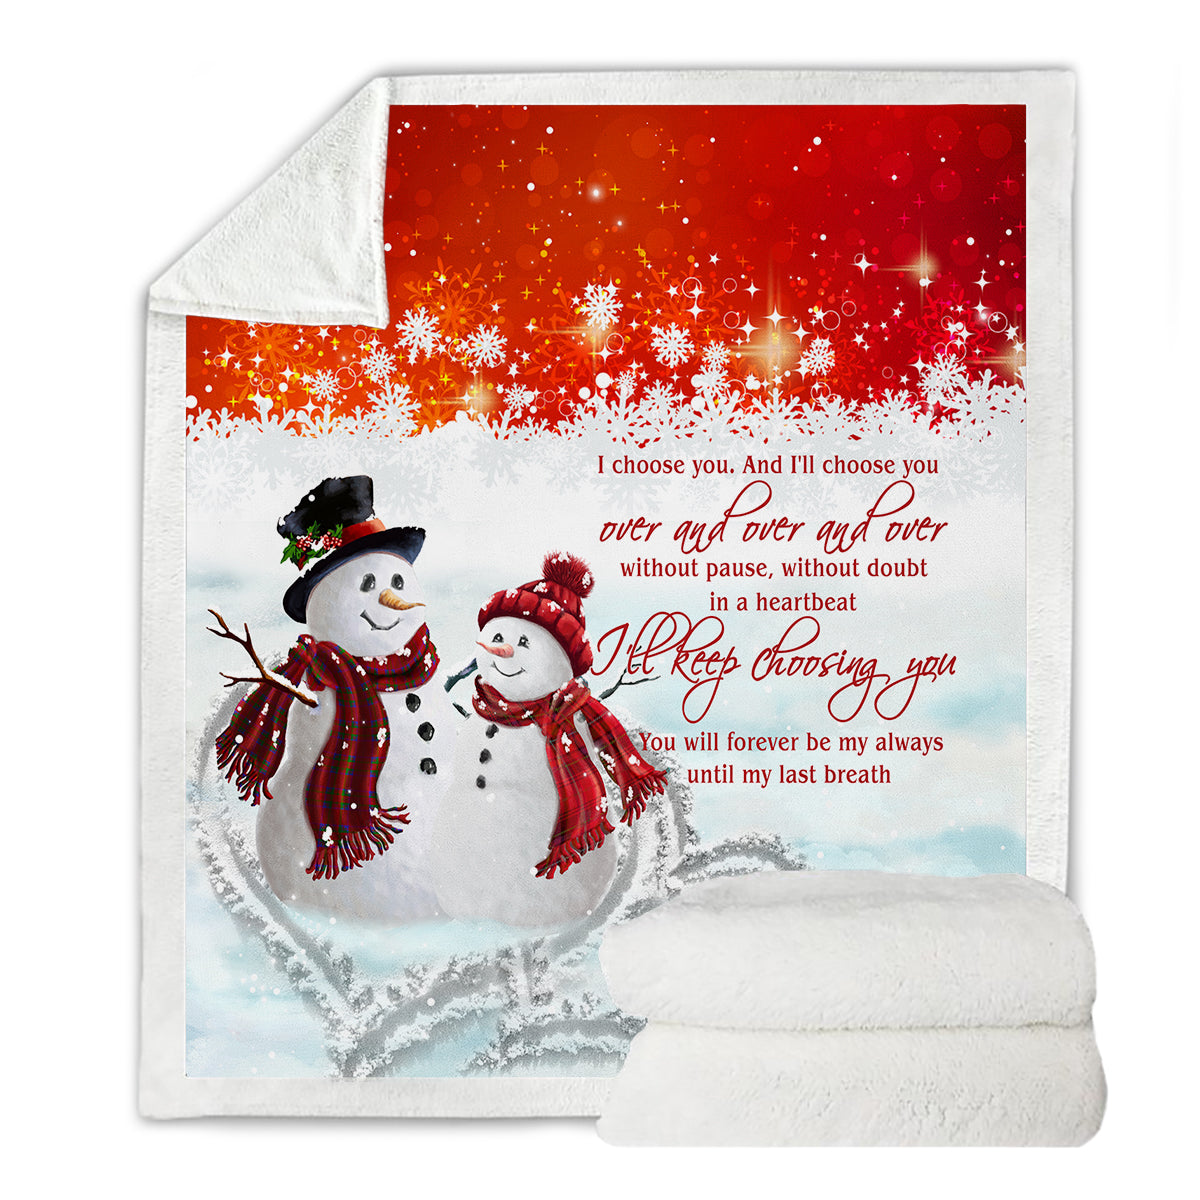 WONGS BEDDING Christmas Snowman Blanket